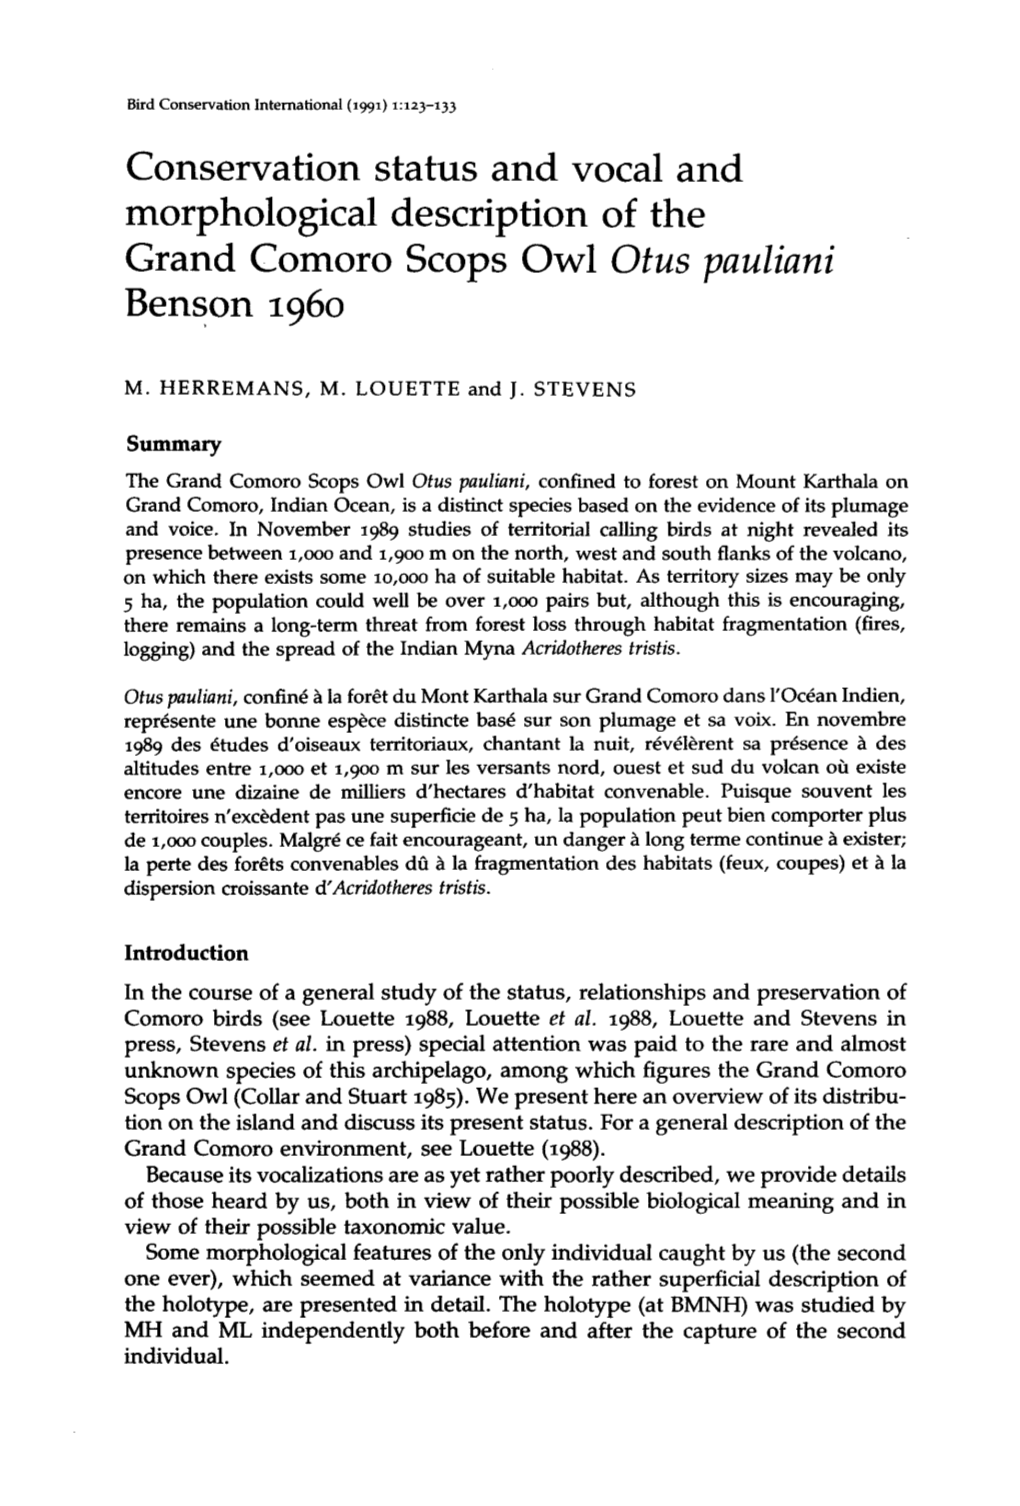 Conservation Status and Vocal and Morphological Description of the Grand Comoro Scops Owl Otus Pauliani Benson I960